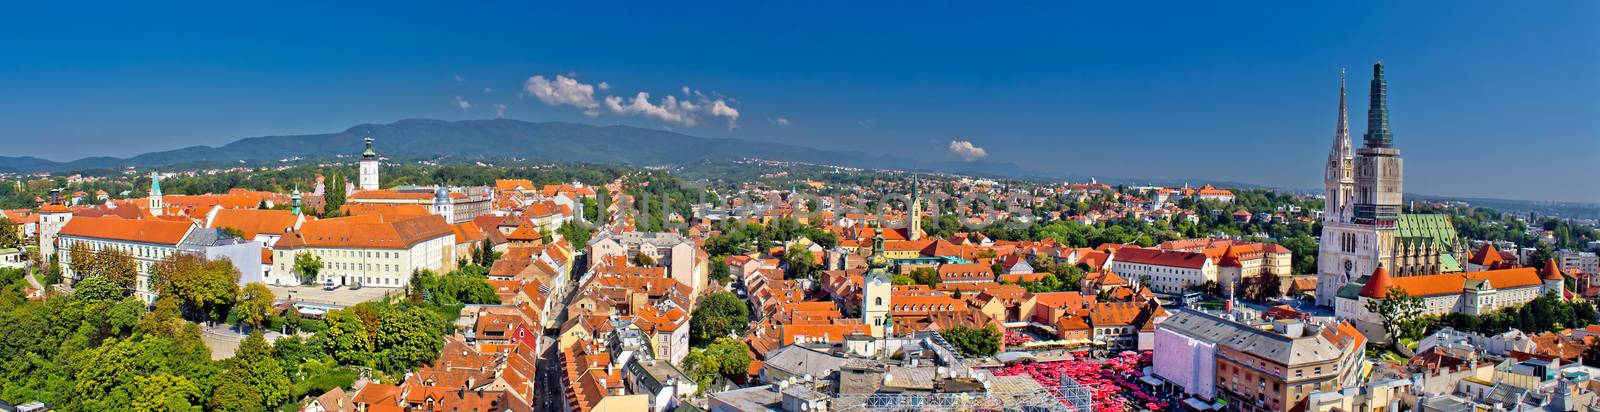 Historic city of Zagreb panoramic by xbrchx